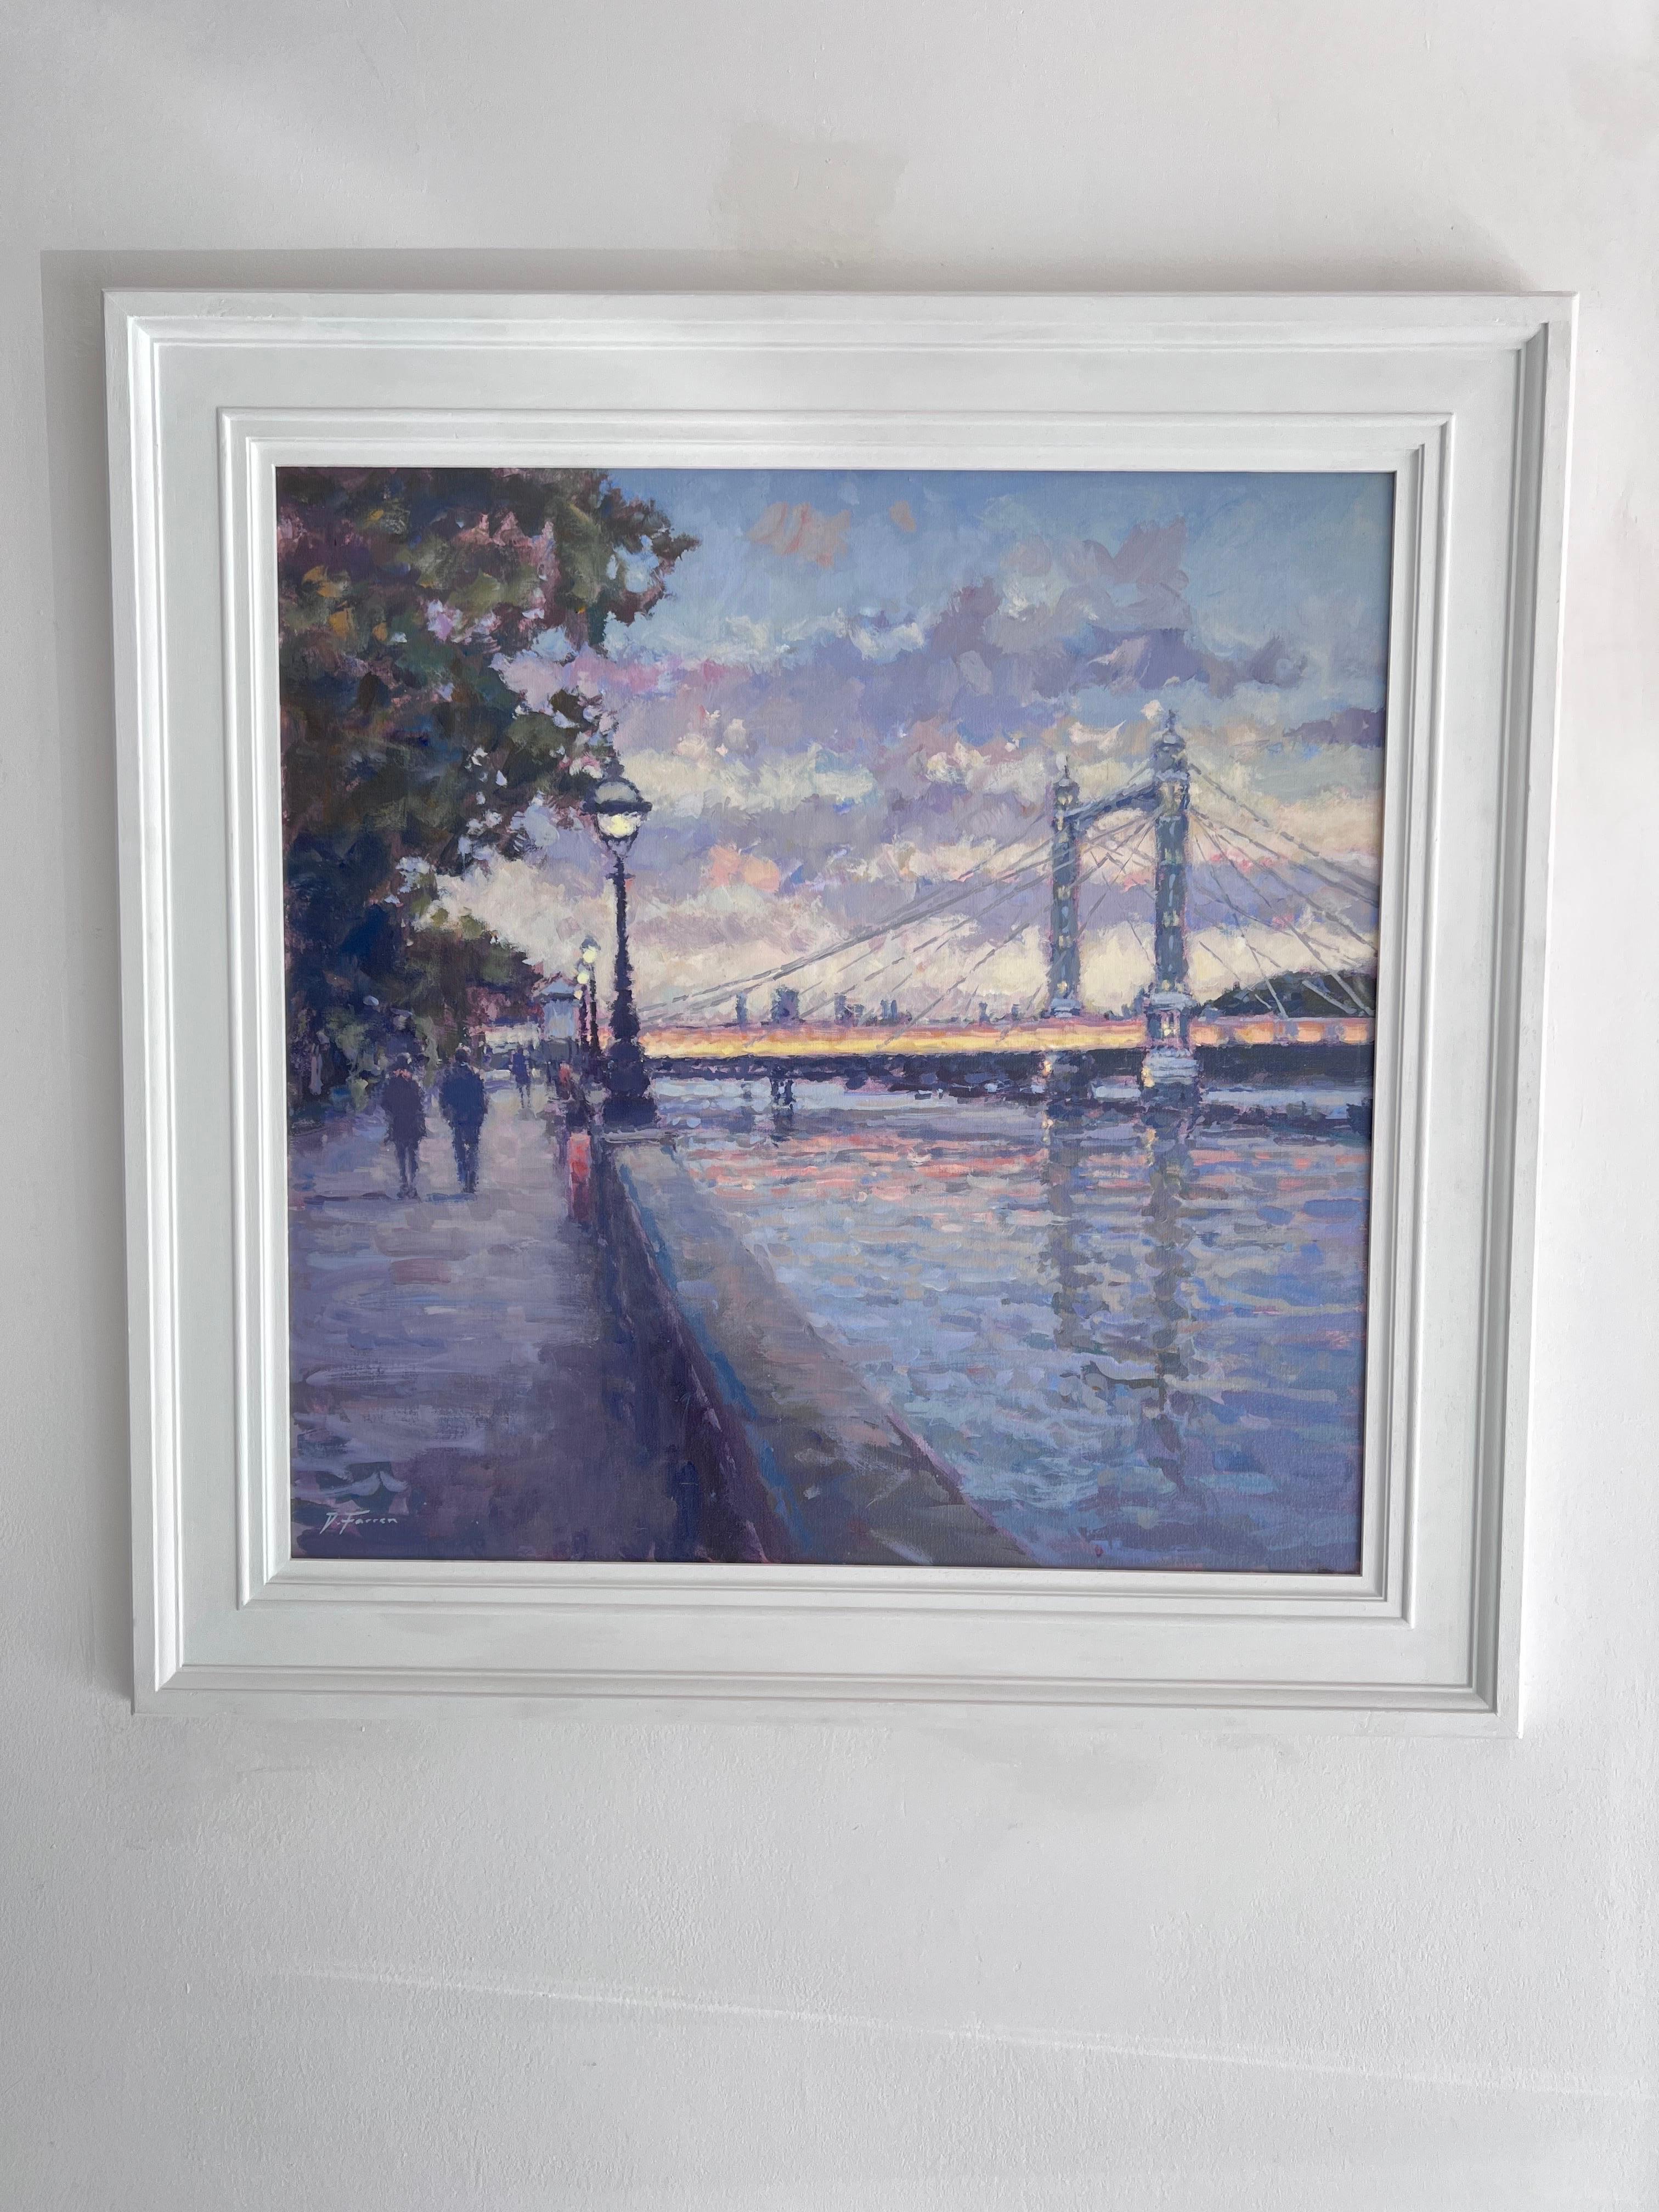 October Evening, Albert Bridge-Art, peinture impressionniste originale de paysage urbain - Painting de David Farren